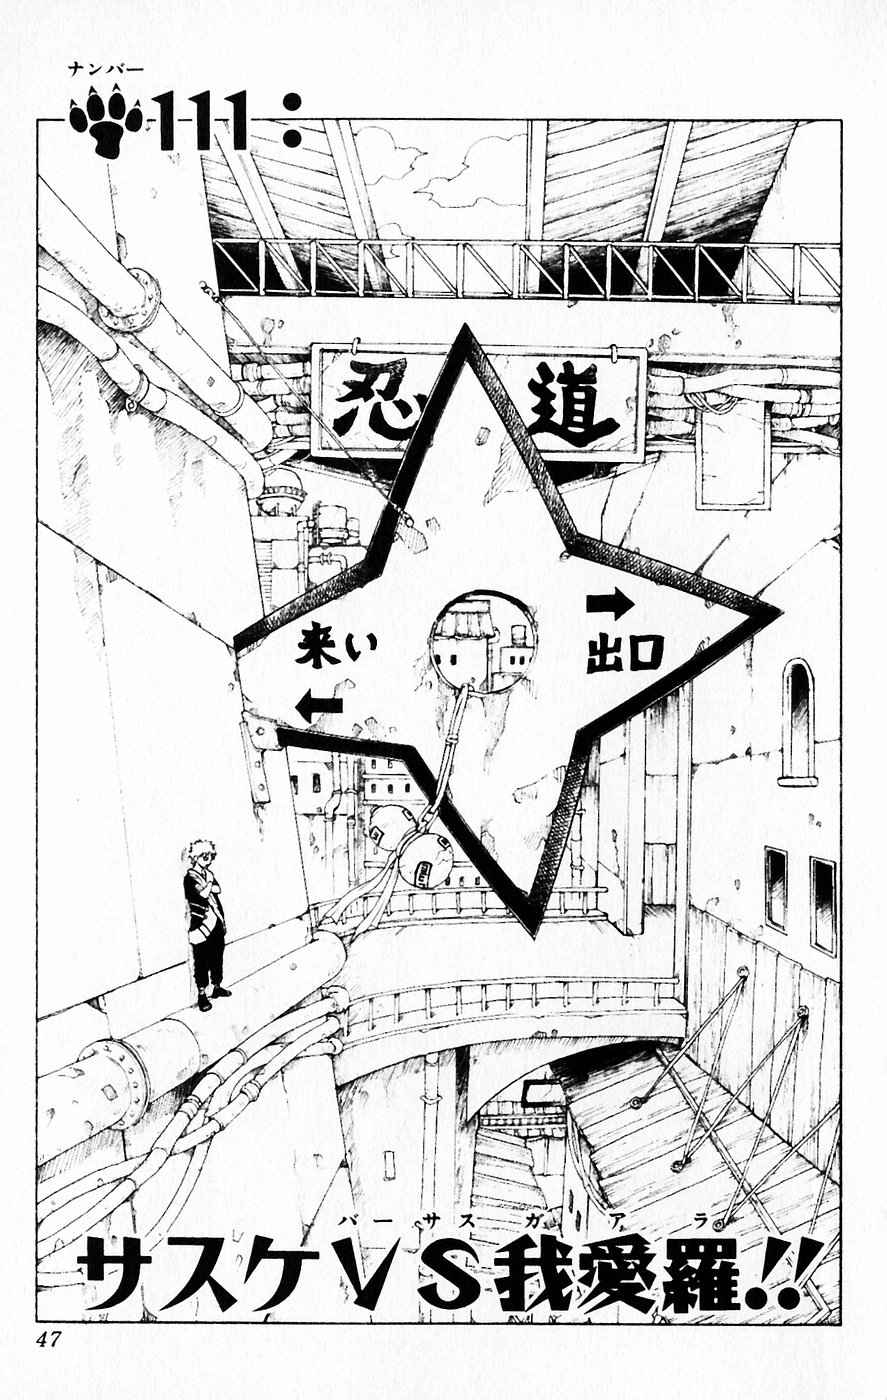 《NARUTO-ナルト-(日文)》漫画 NARUTO 13卷